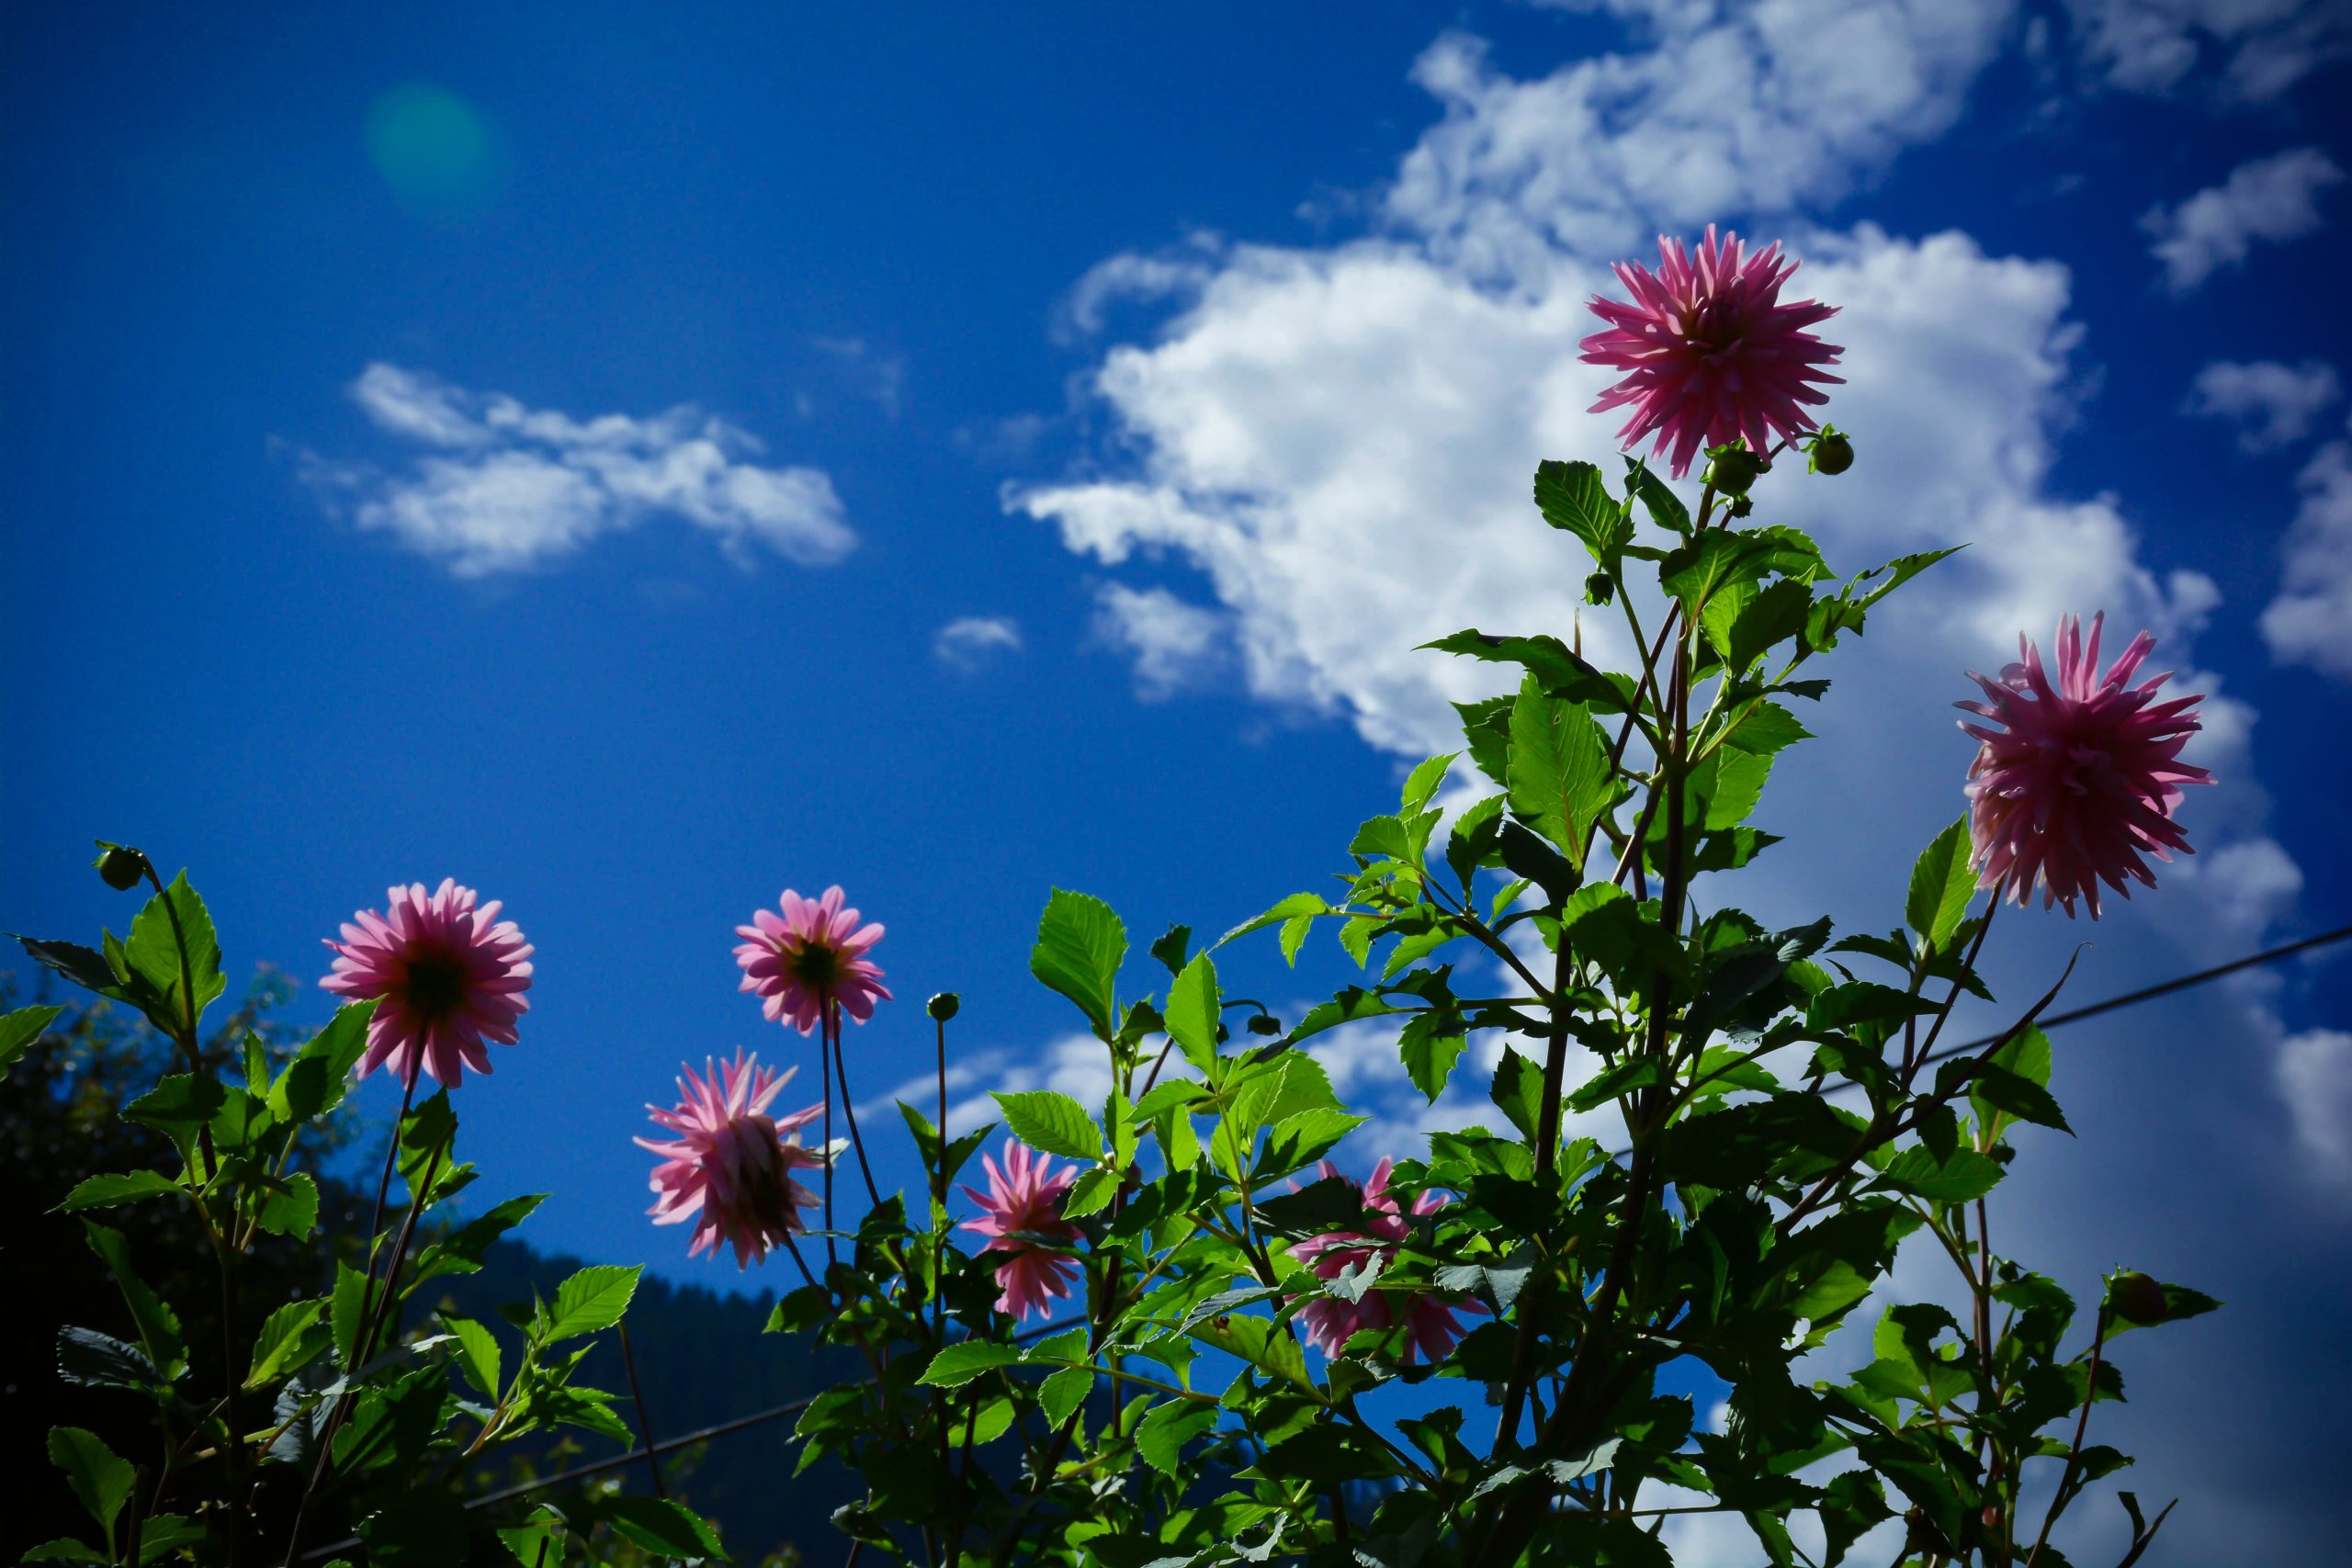 flowers against the sky